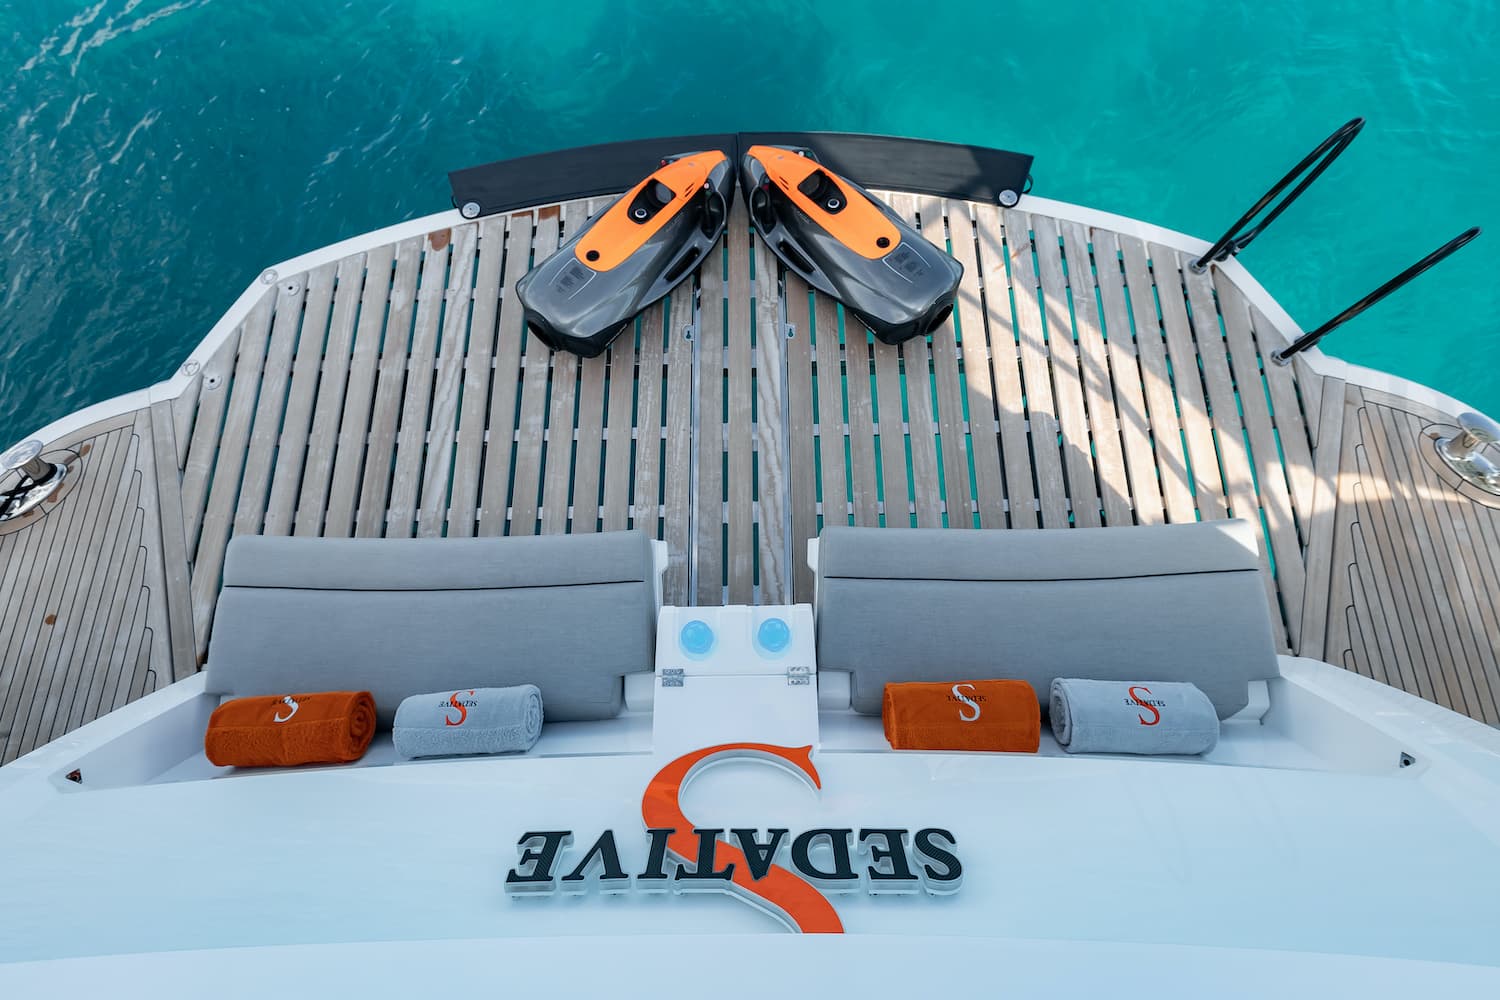 Sunseeker 116 Lounge and Decks - Sedative Yacht Charter